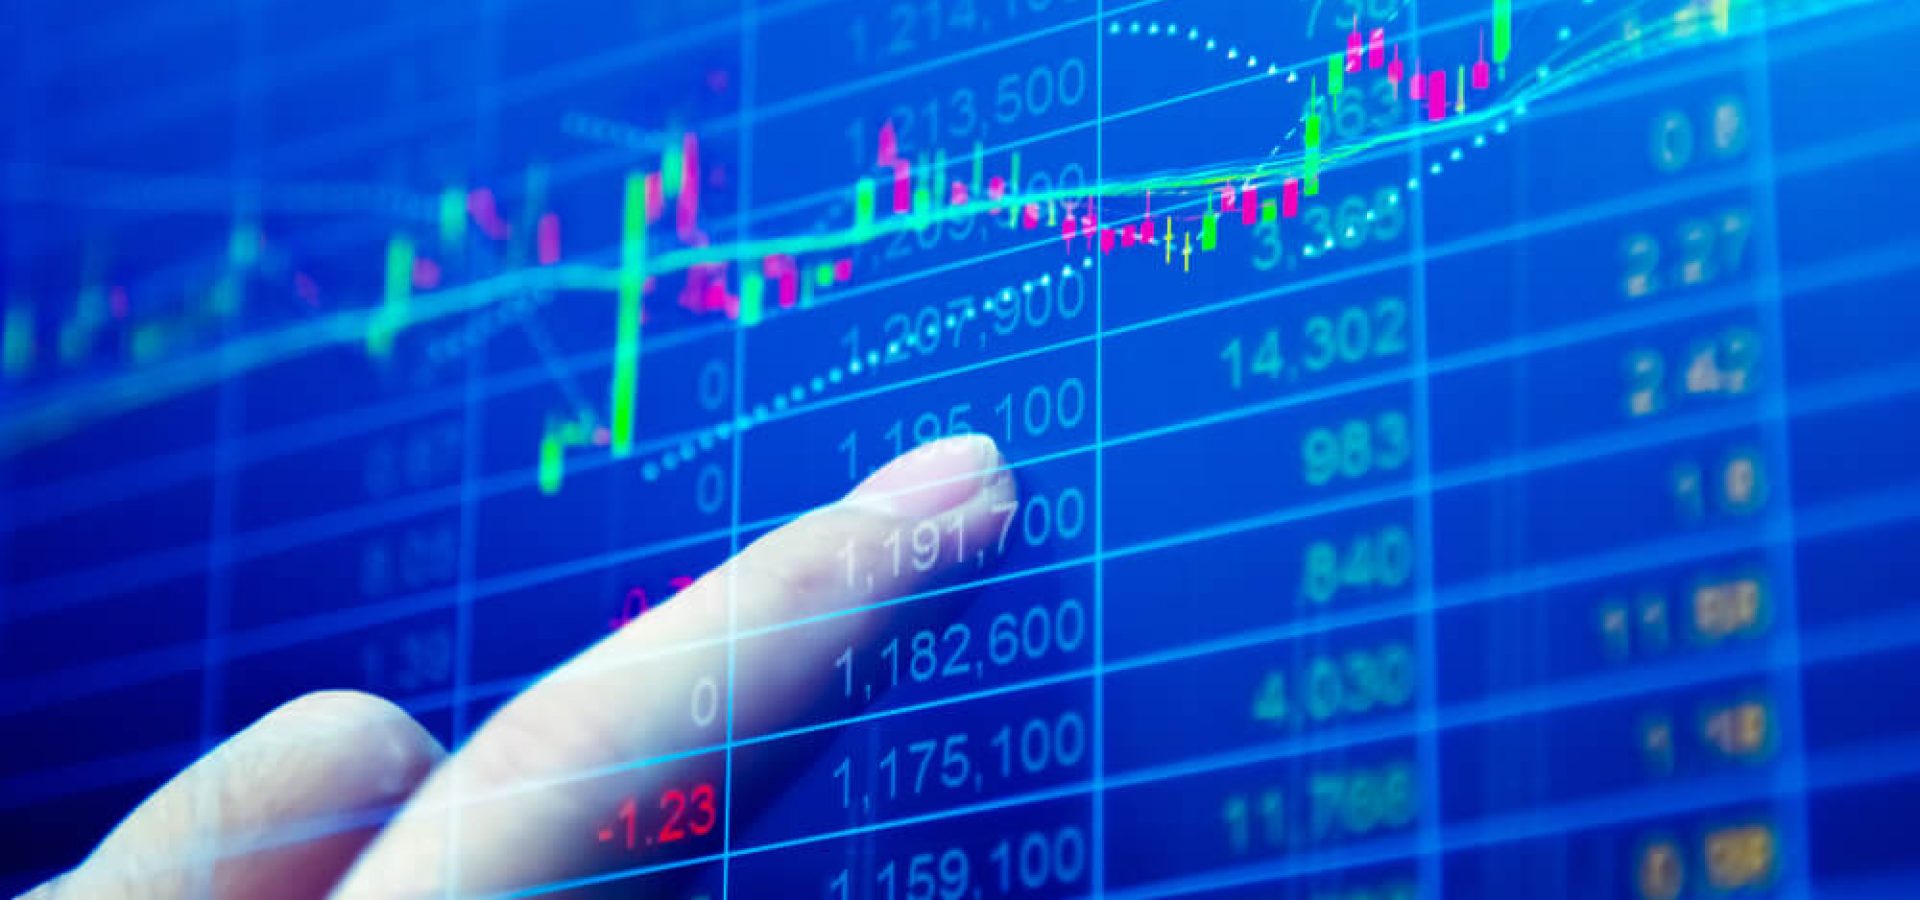 Wibest Broker-Share Market News: Closeup shot of a finger pointing at graphs on stock market chart